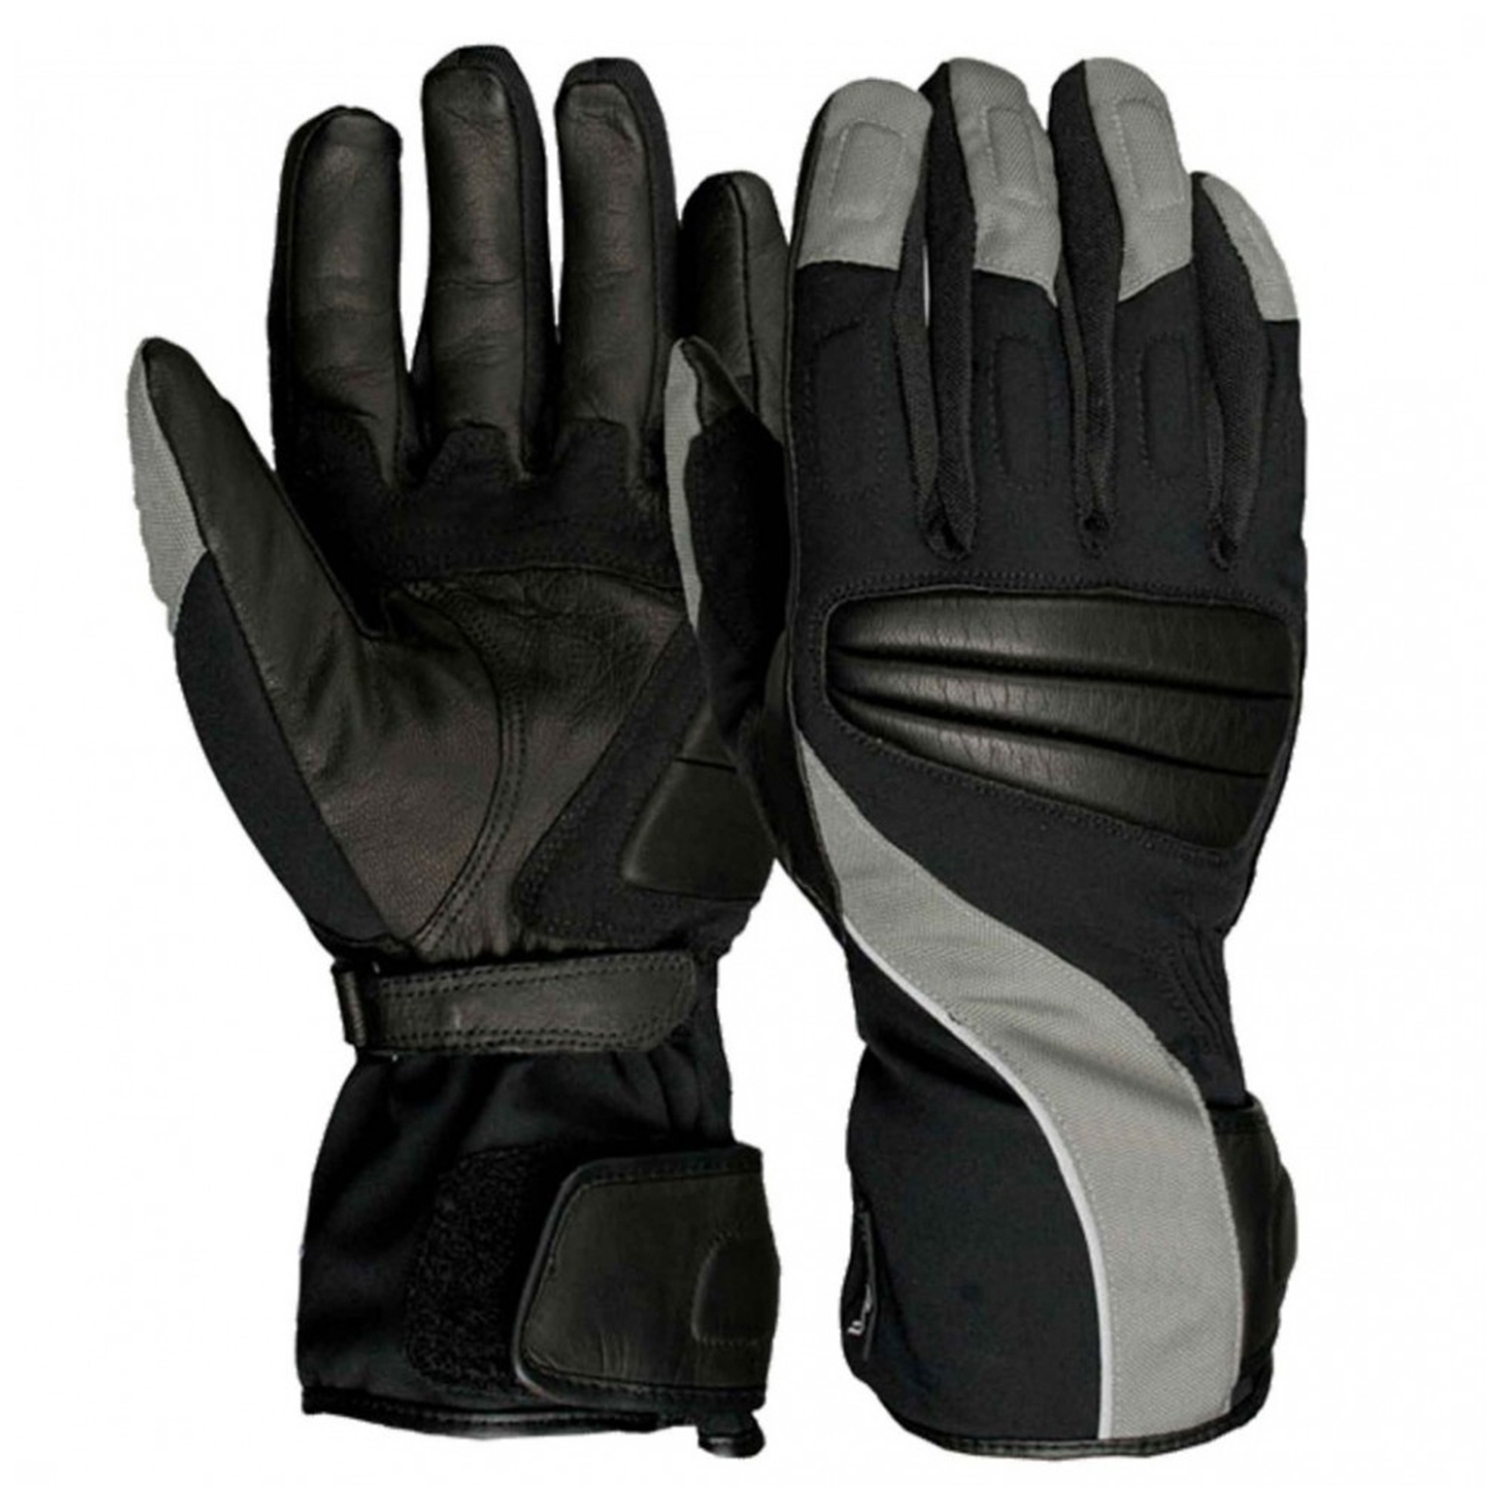 Ski Gloves Manufacturers